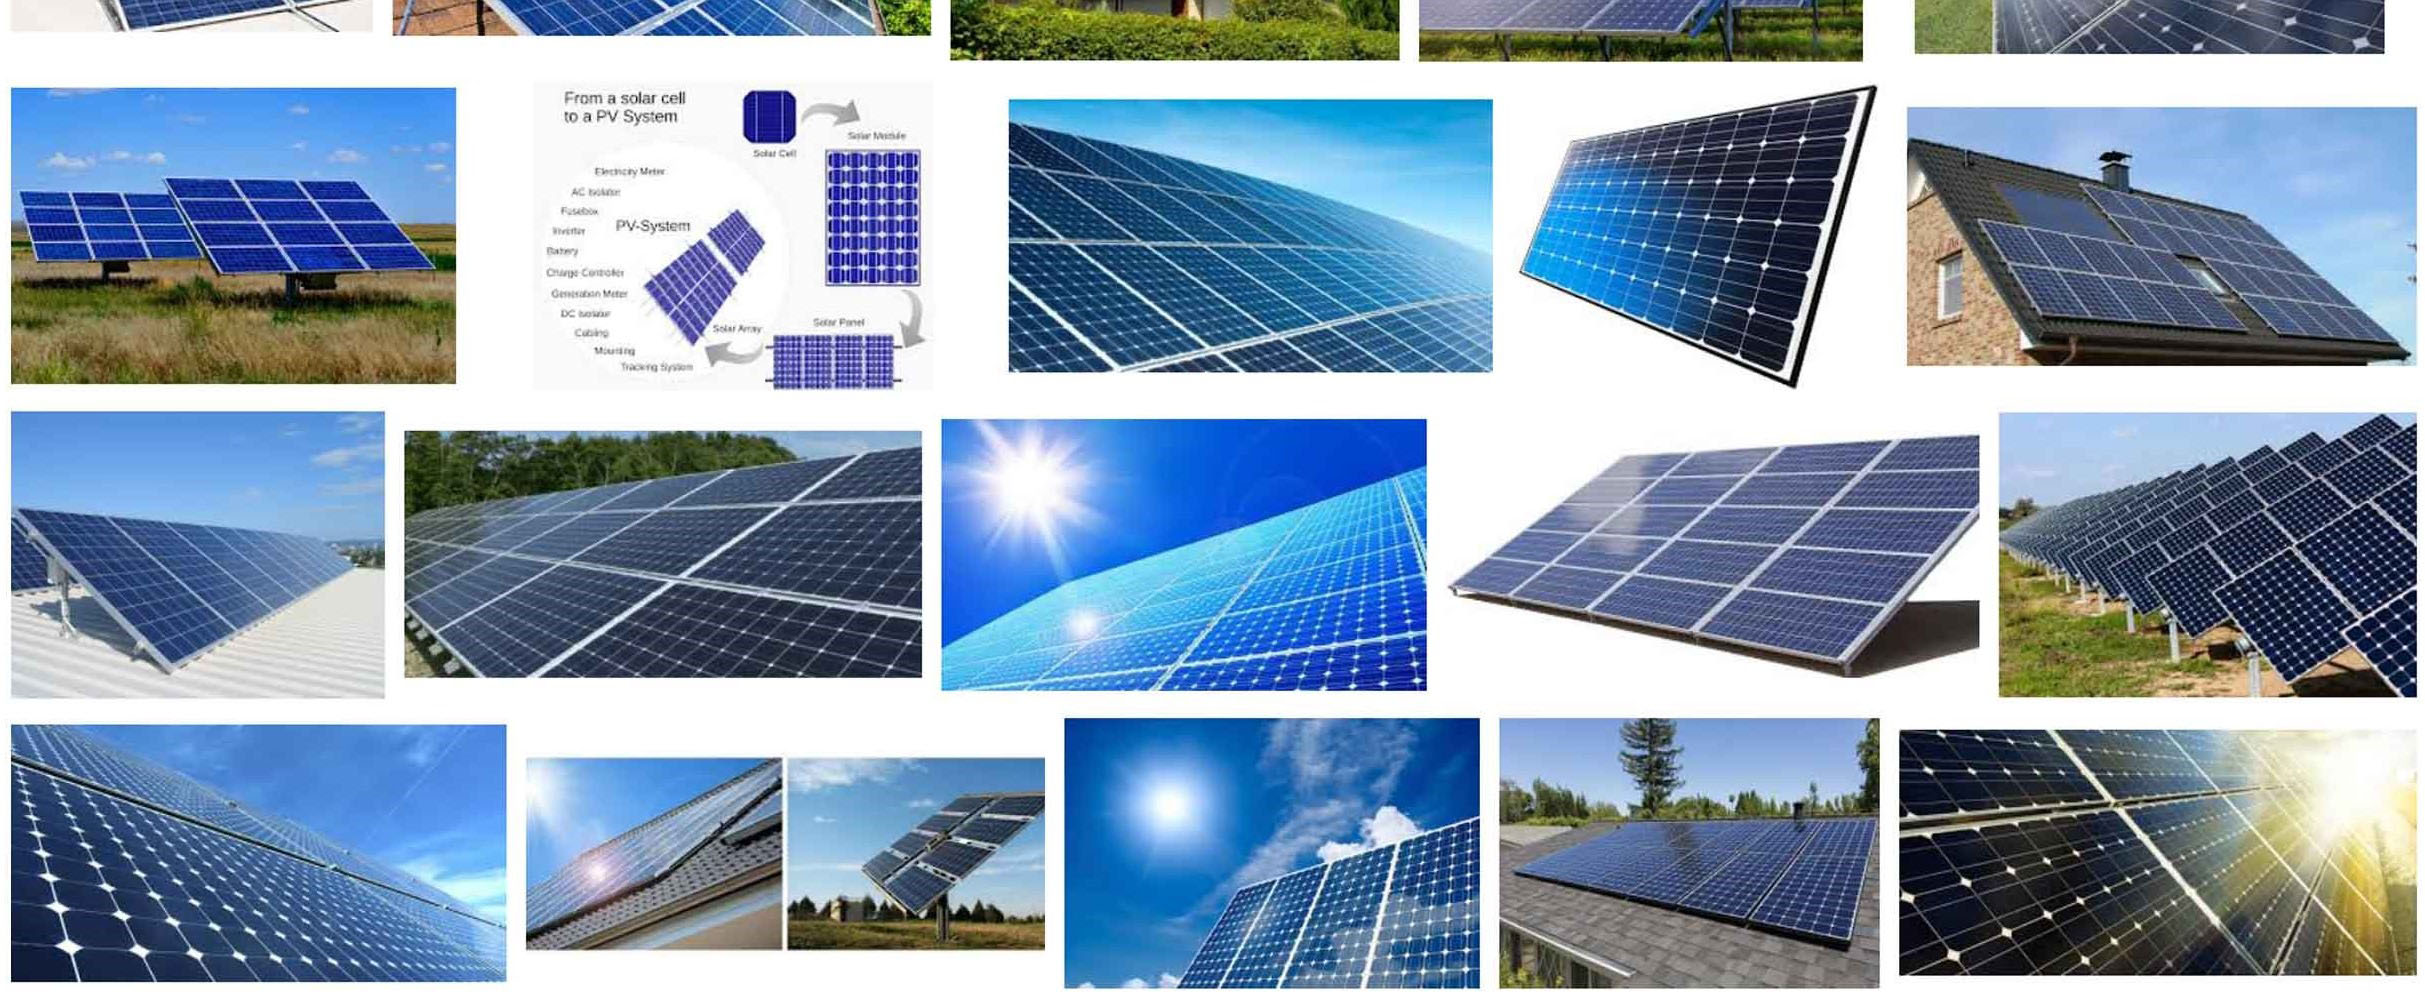 Solar Panels Research/Inspiration